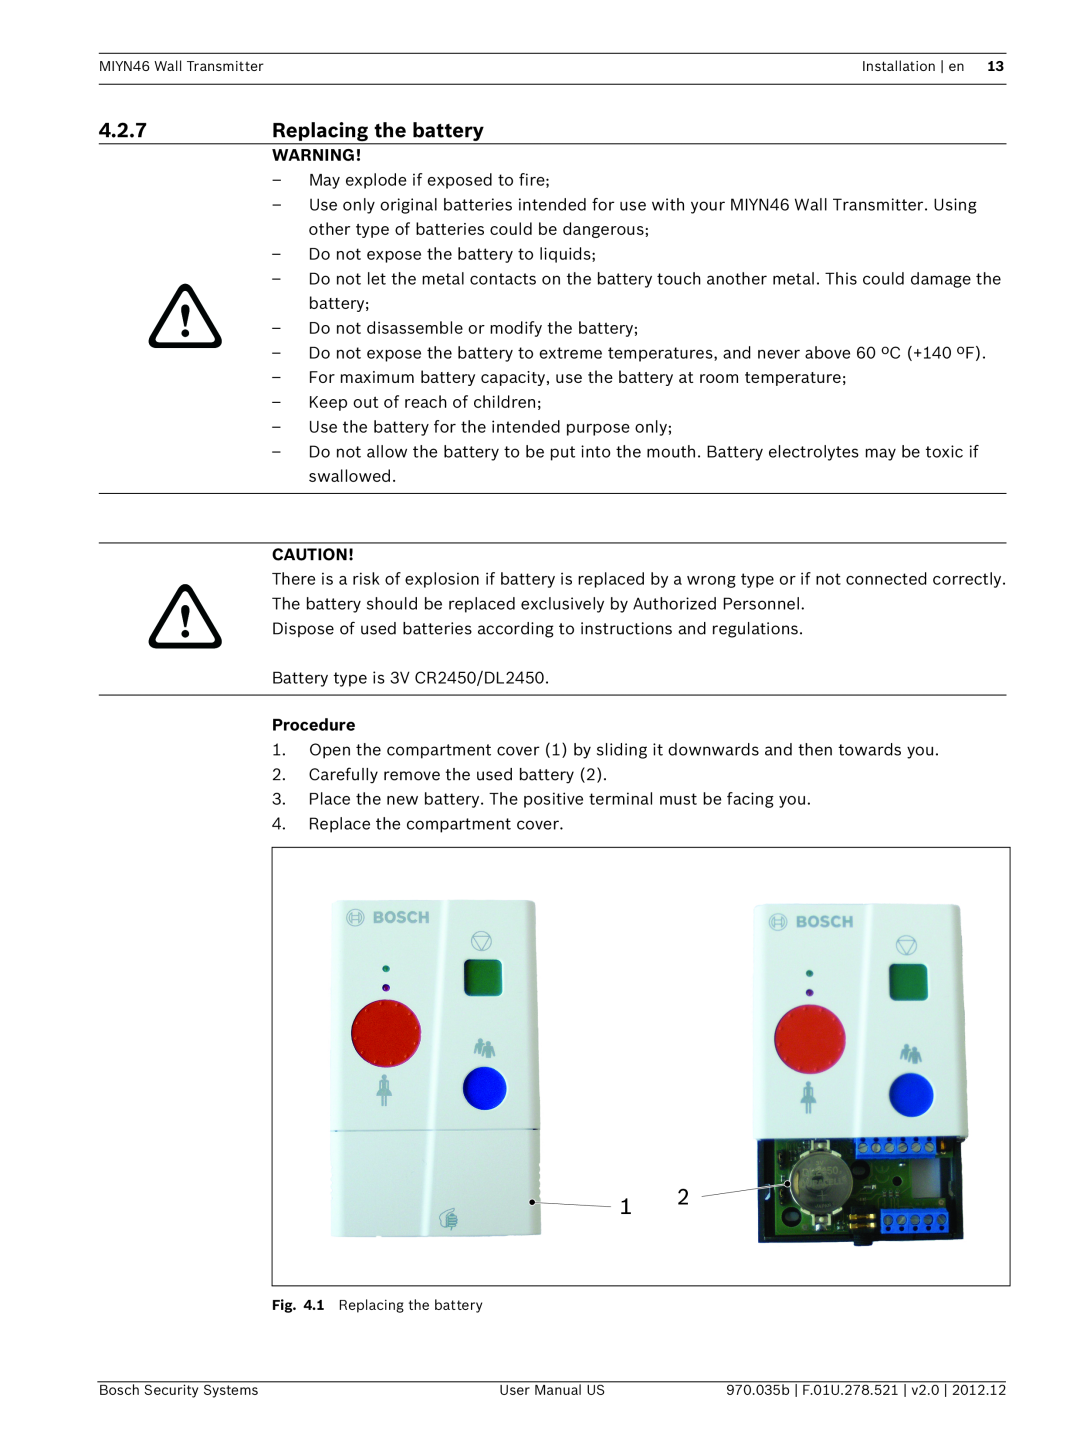 Bosch Appliances MIYN46 user manual 4.2.7Replacing the battery, Procedure 